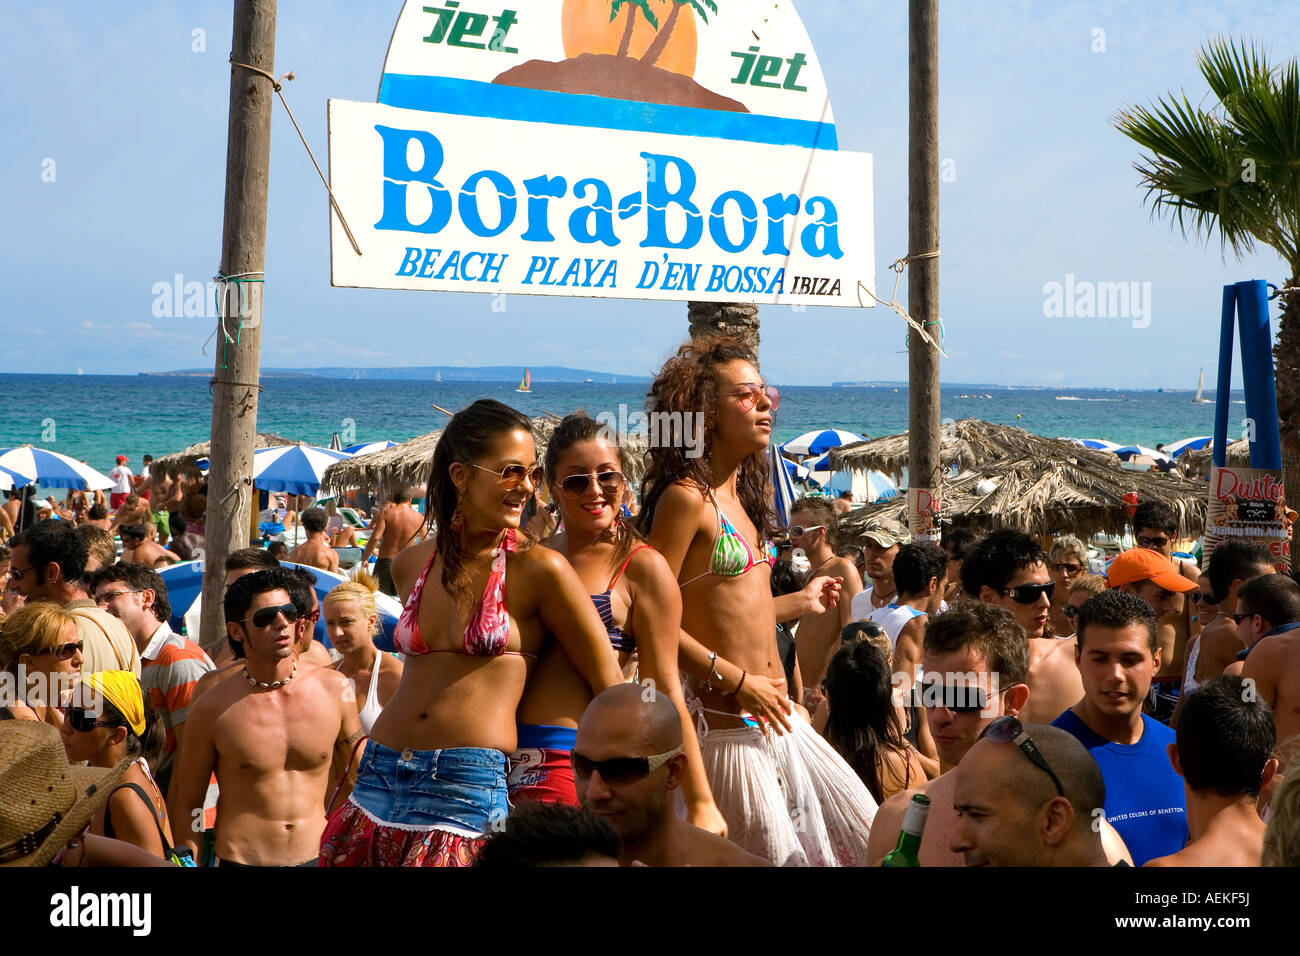 Bora Bora Beach Ibiza High Resolution Stock Photography And Images Alamy